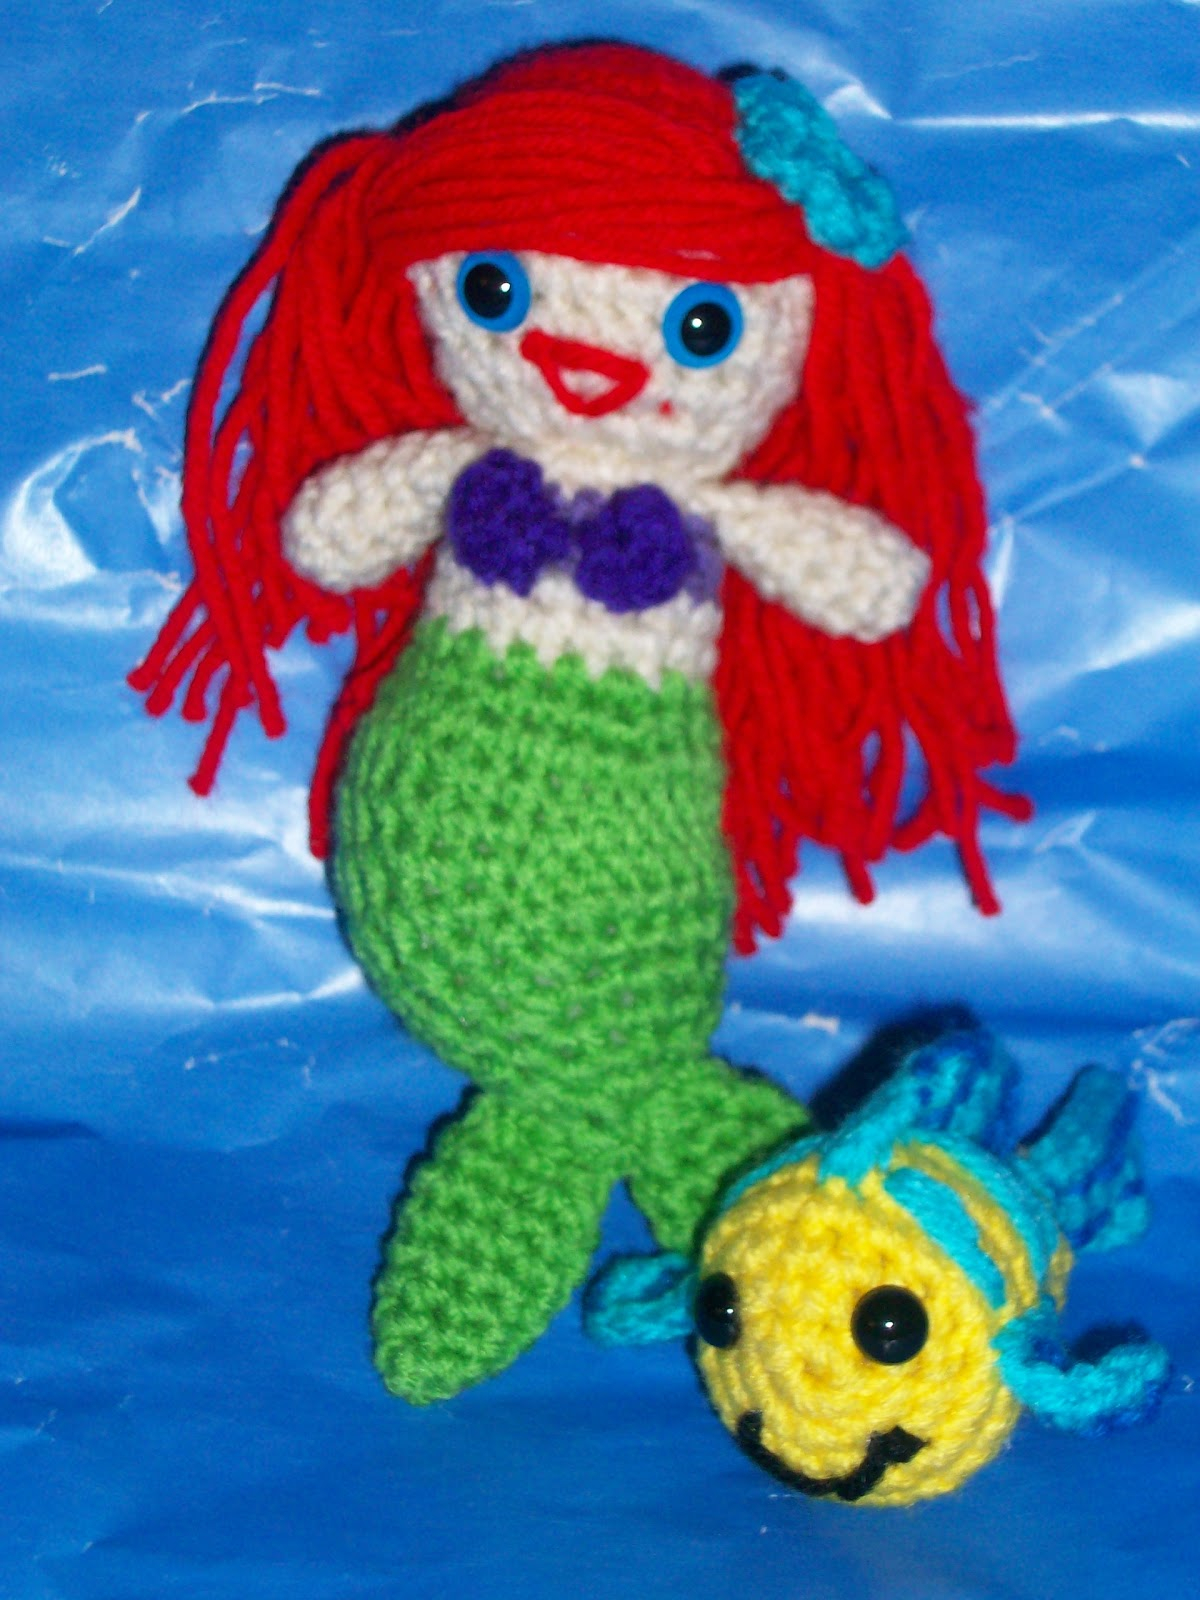 Crochet World Patterns My Crocheted World Little Mermaid And Flounder Free Crochet Patterns